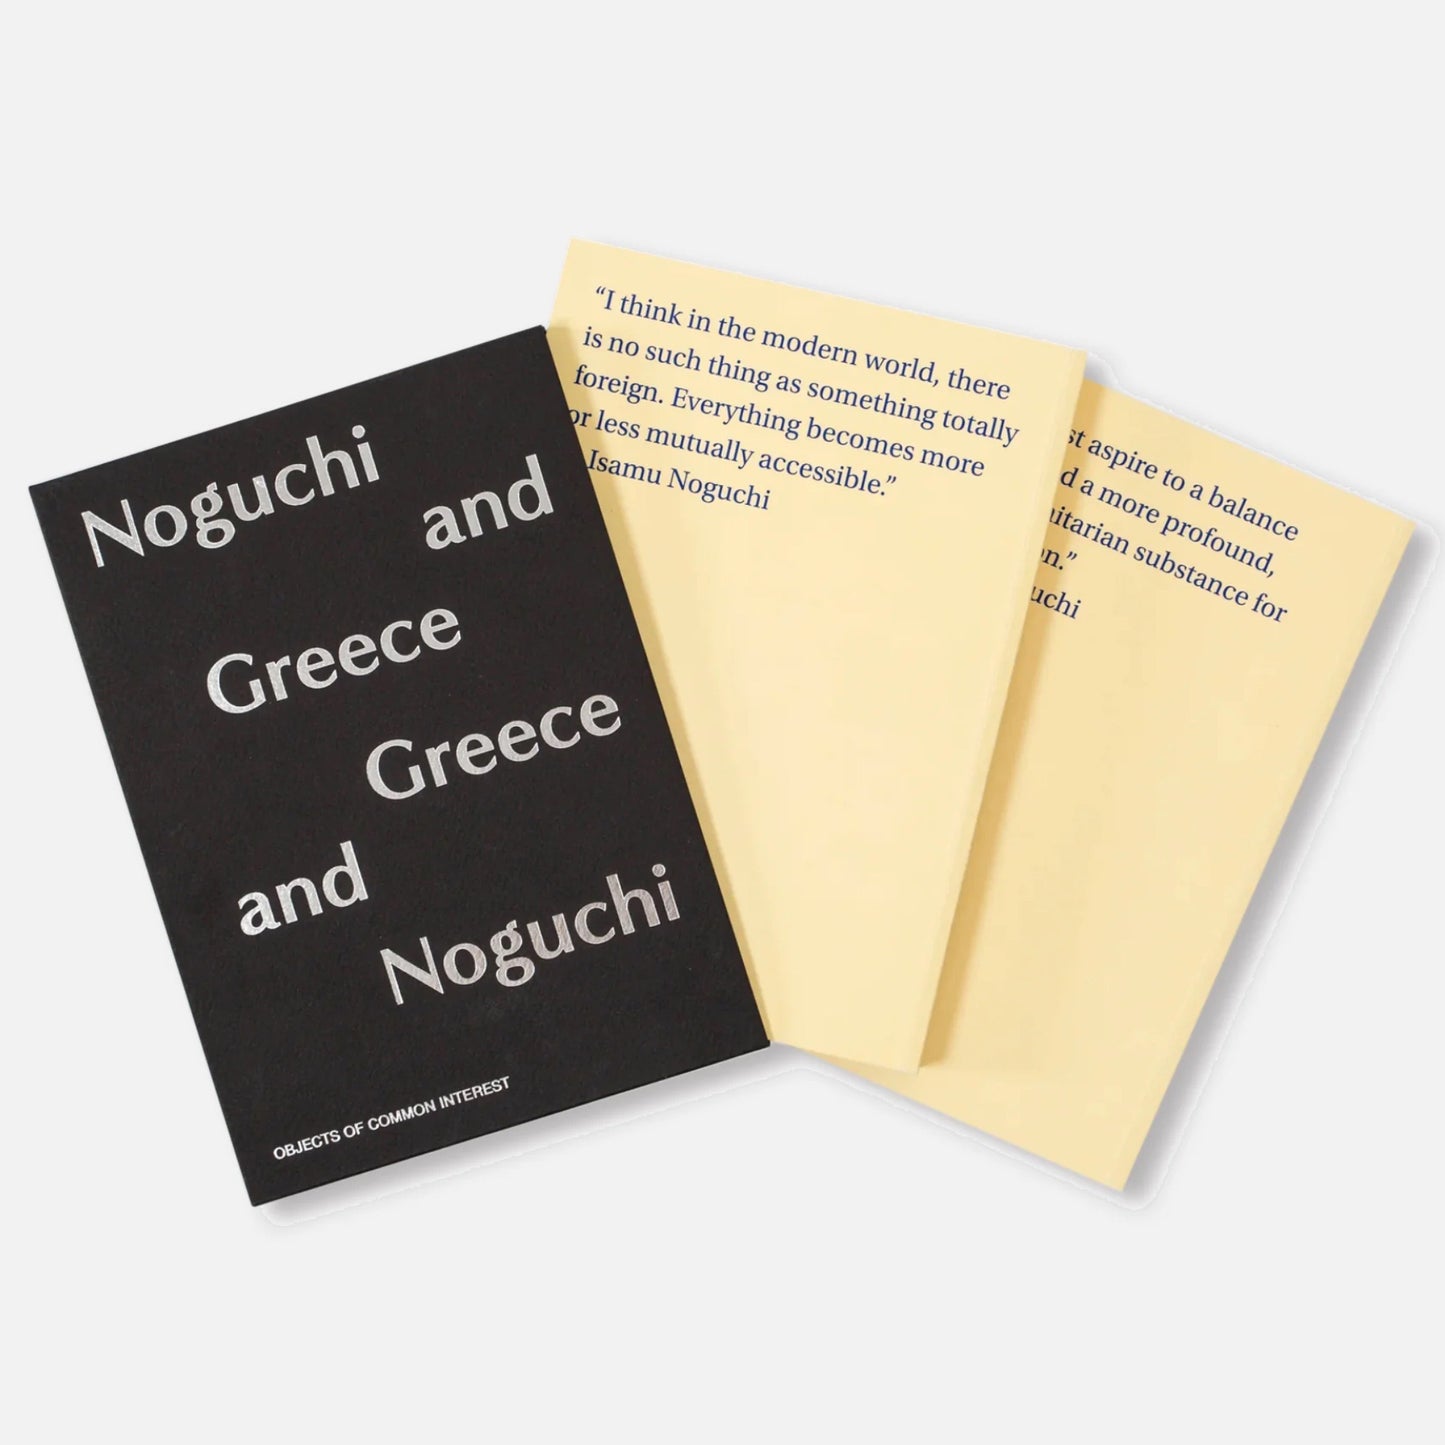 NOGUCHI AND GREECE, GREECE AND NOGUCHI by Isamu Noguchi